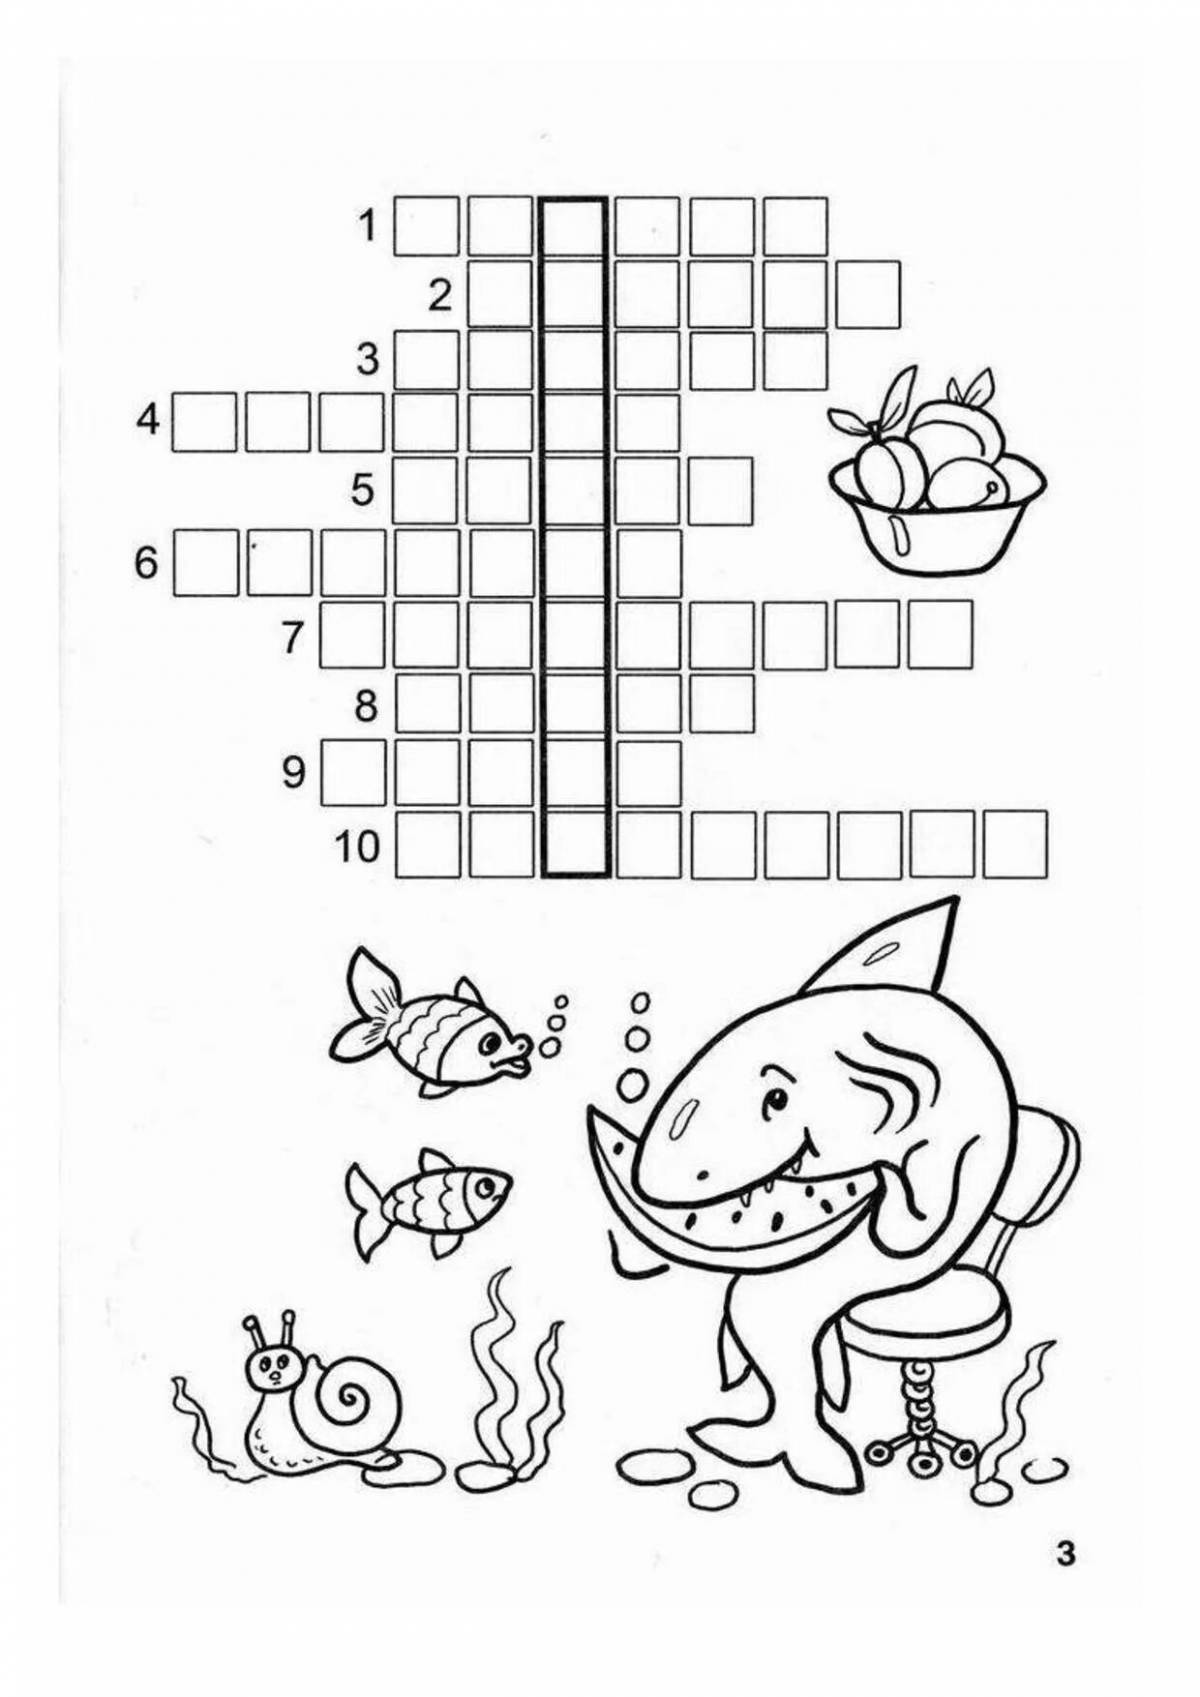 Playful high school crossword